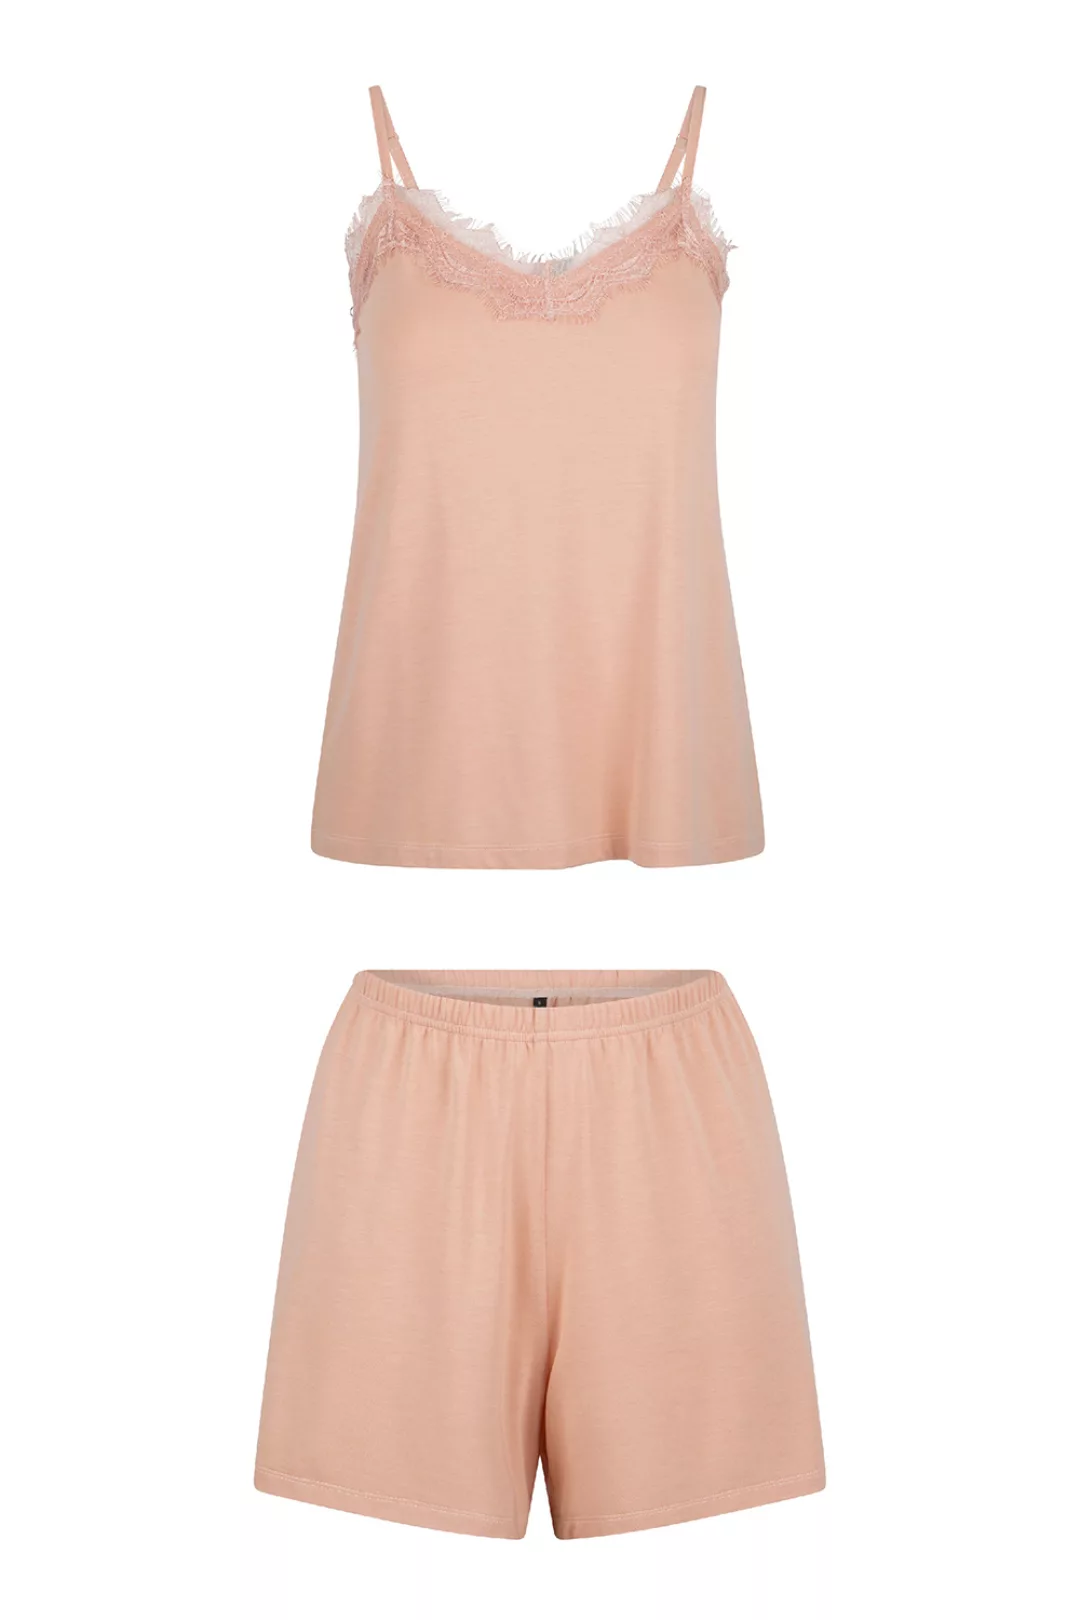 LingaDore Pyjama Set Dusty Desert 38 rosa günstig online kaufen